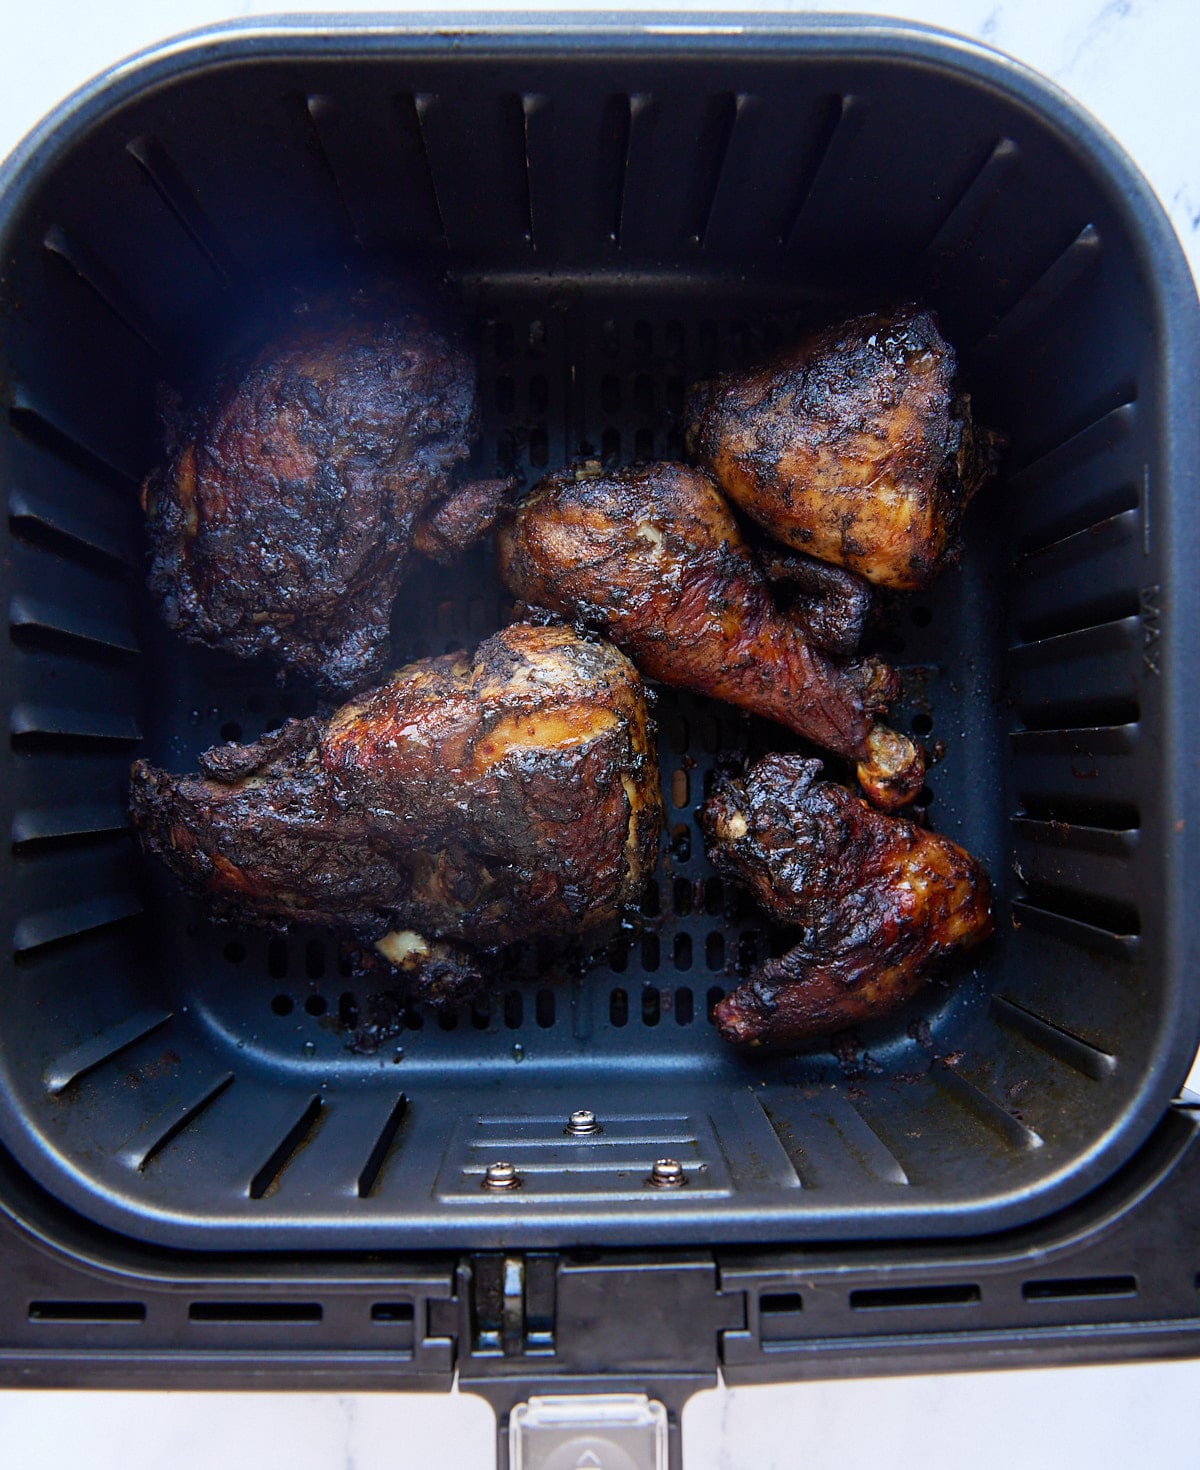 The cooked Jamaican jerk chicken in the air fryer basket.